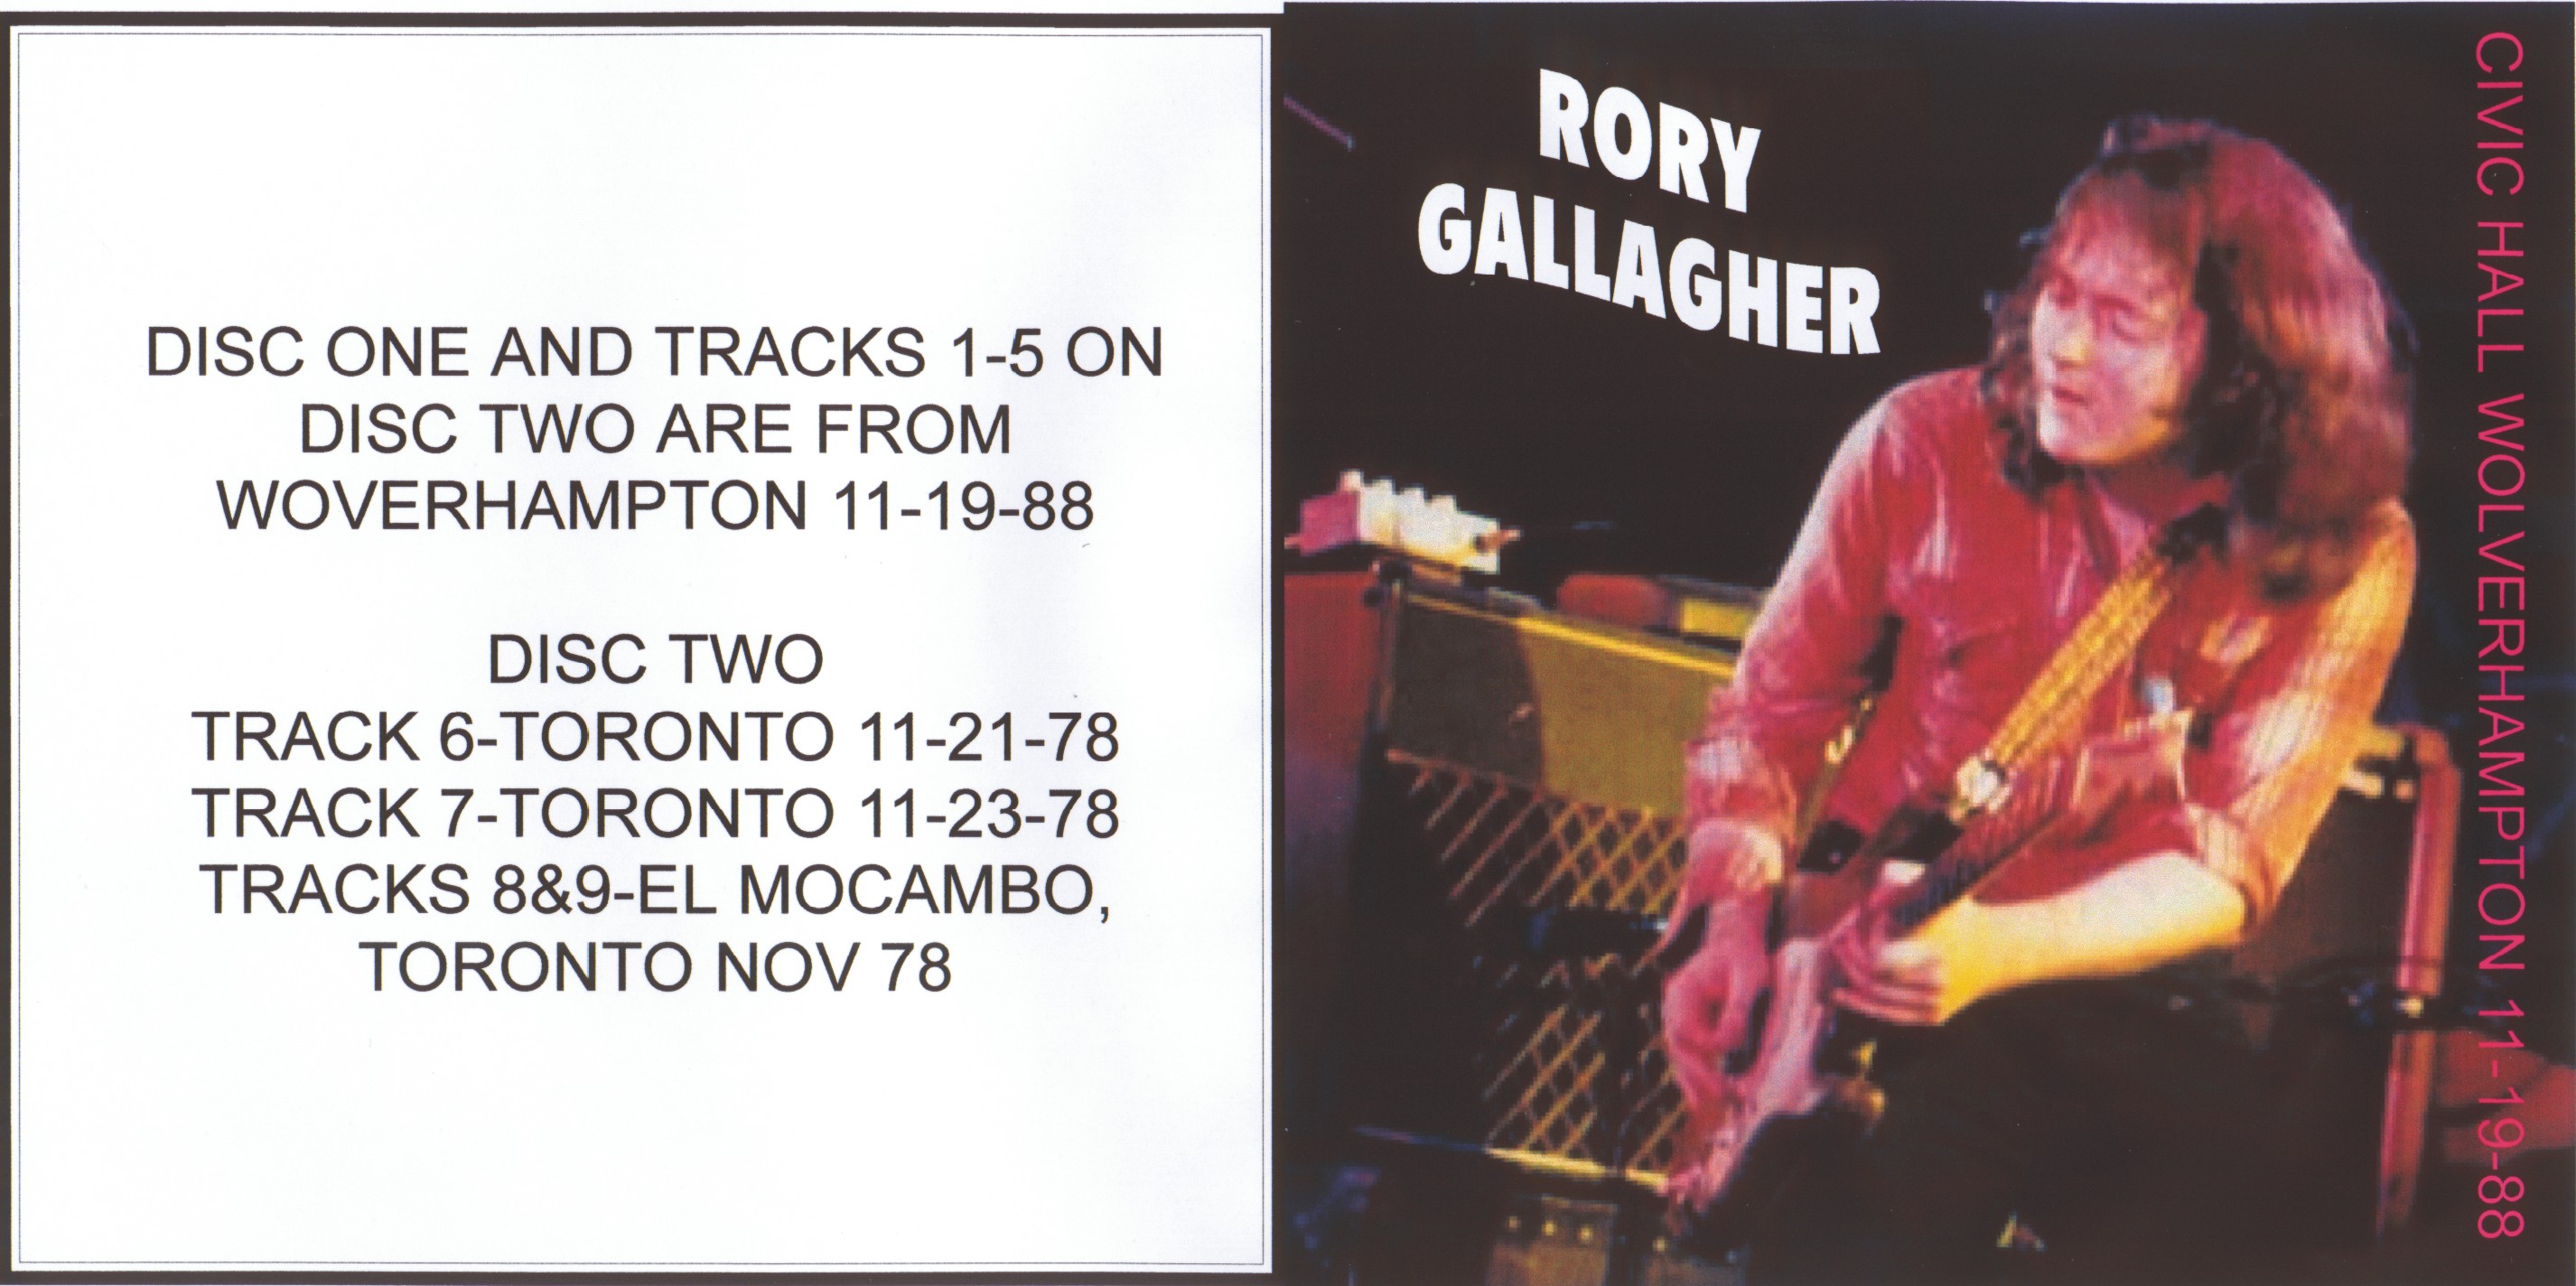 RoryGallagher1988-11-19CivicHallWolverhamptonUK (4).JPG